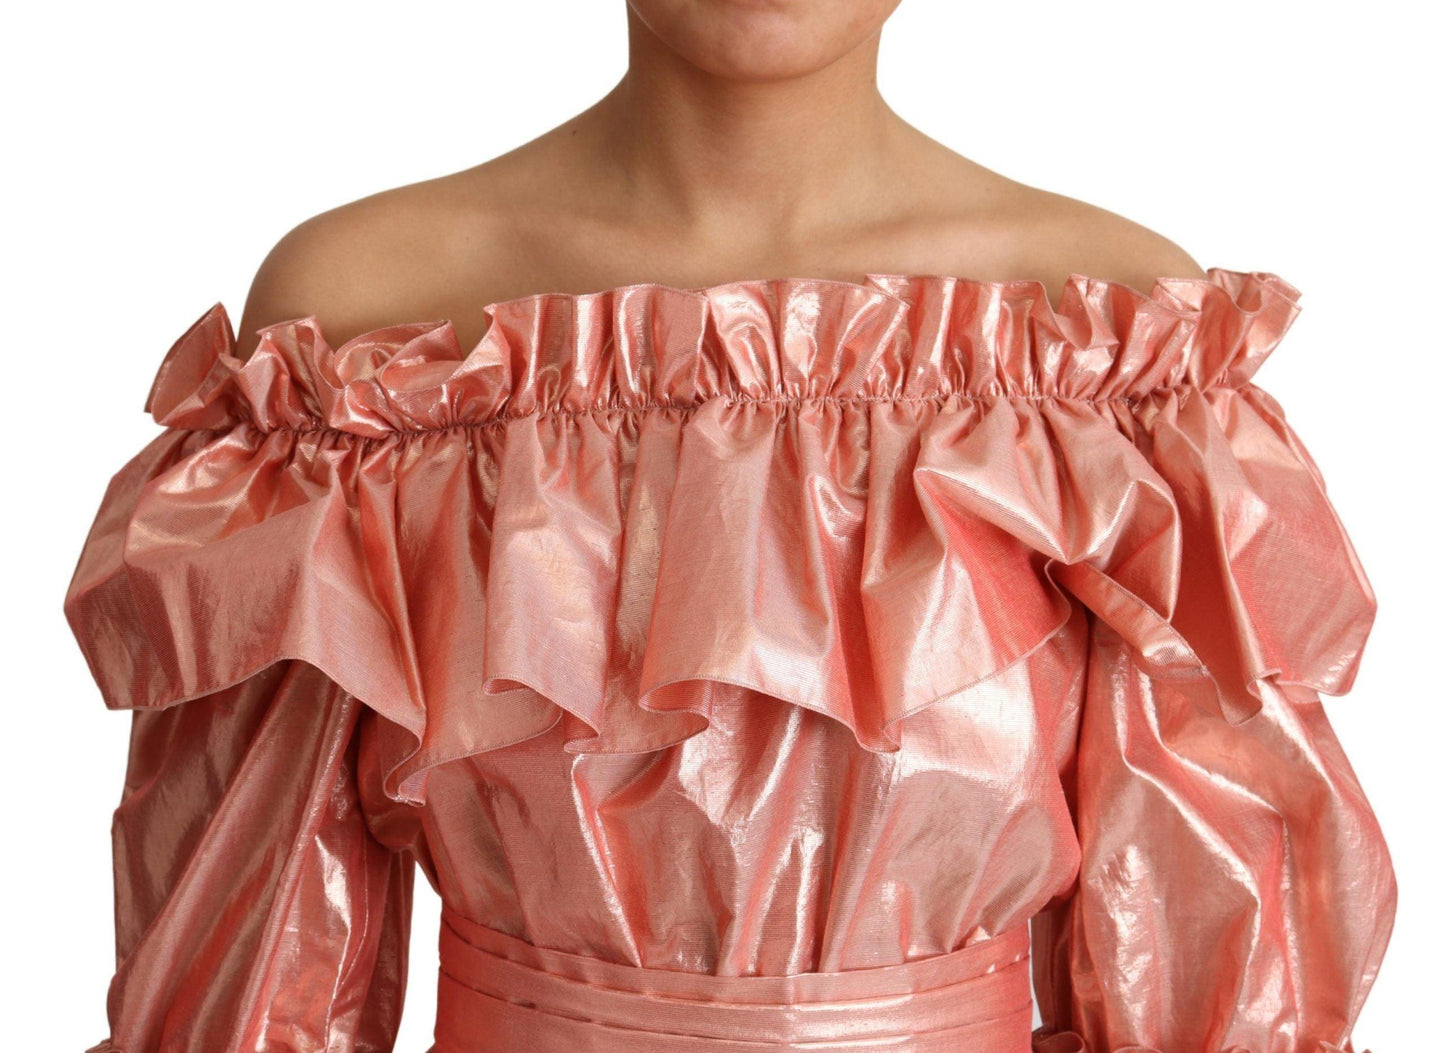 Dolce & Gabbana Pink Metallic Ruffled Gown Elegance - PER.FASHION